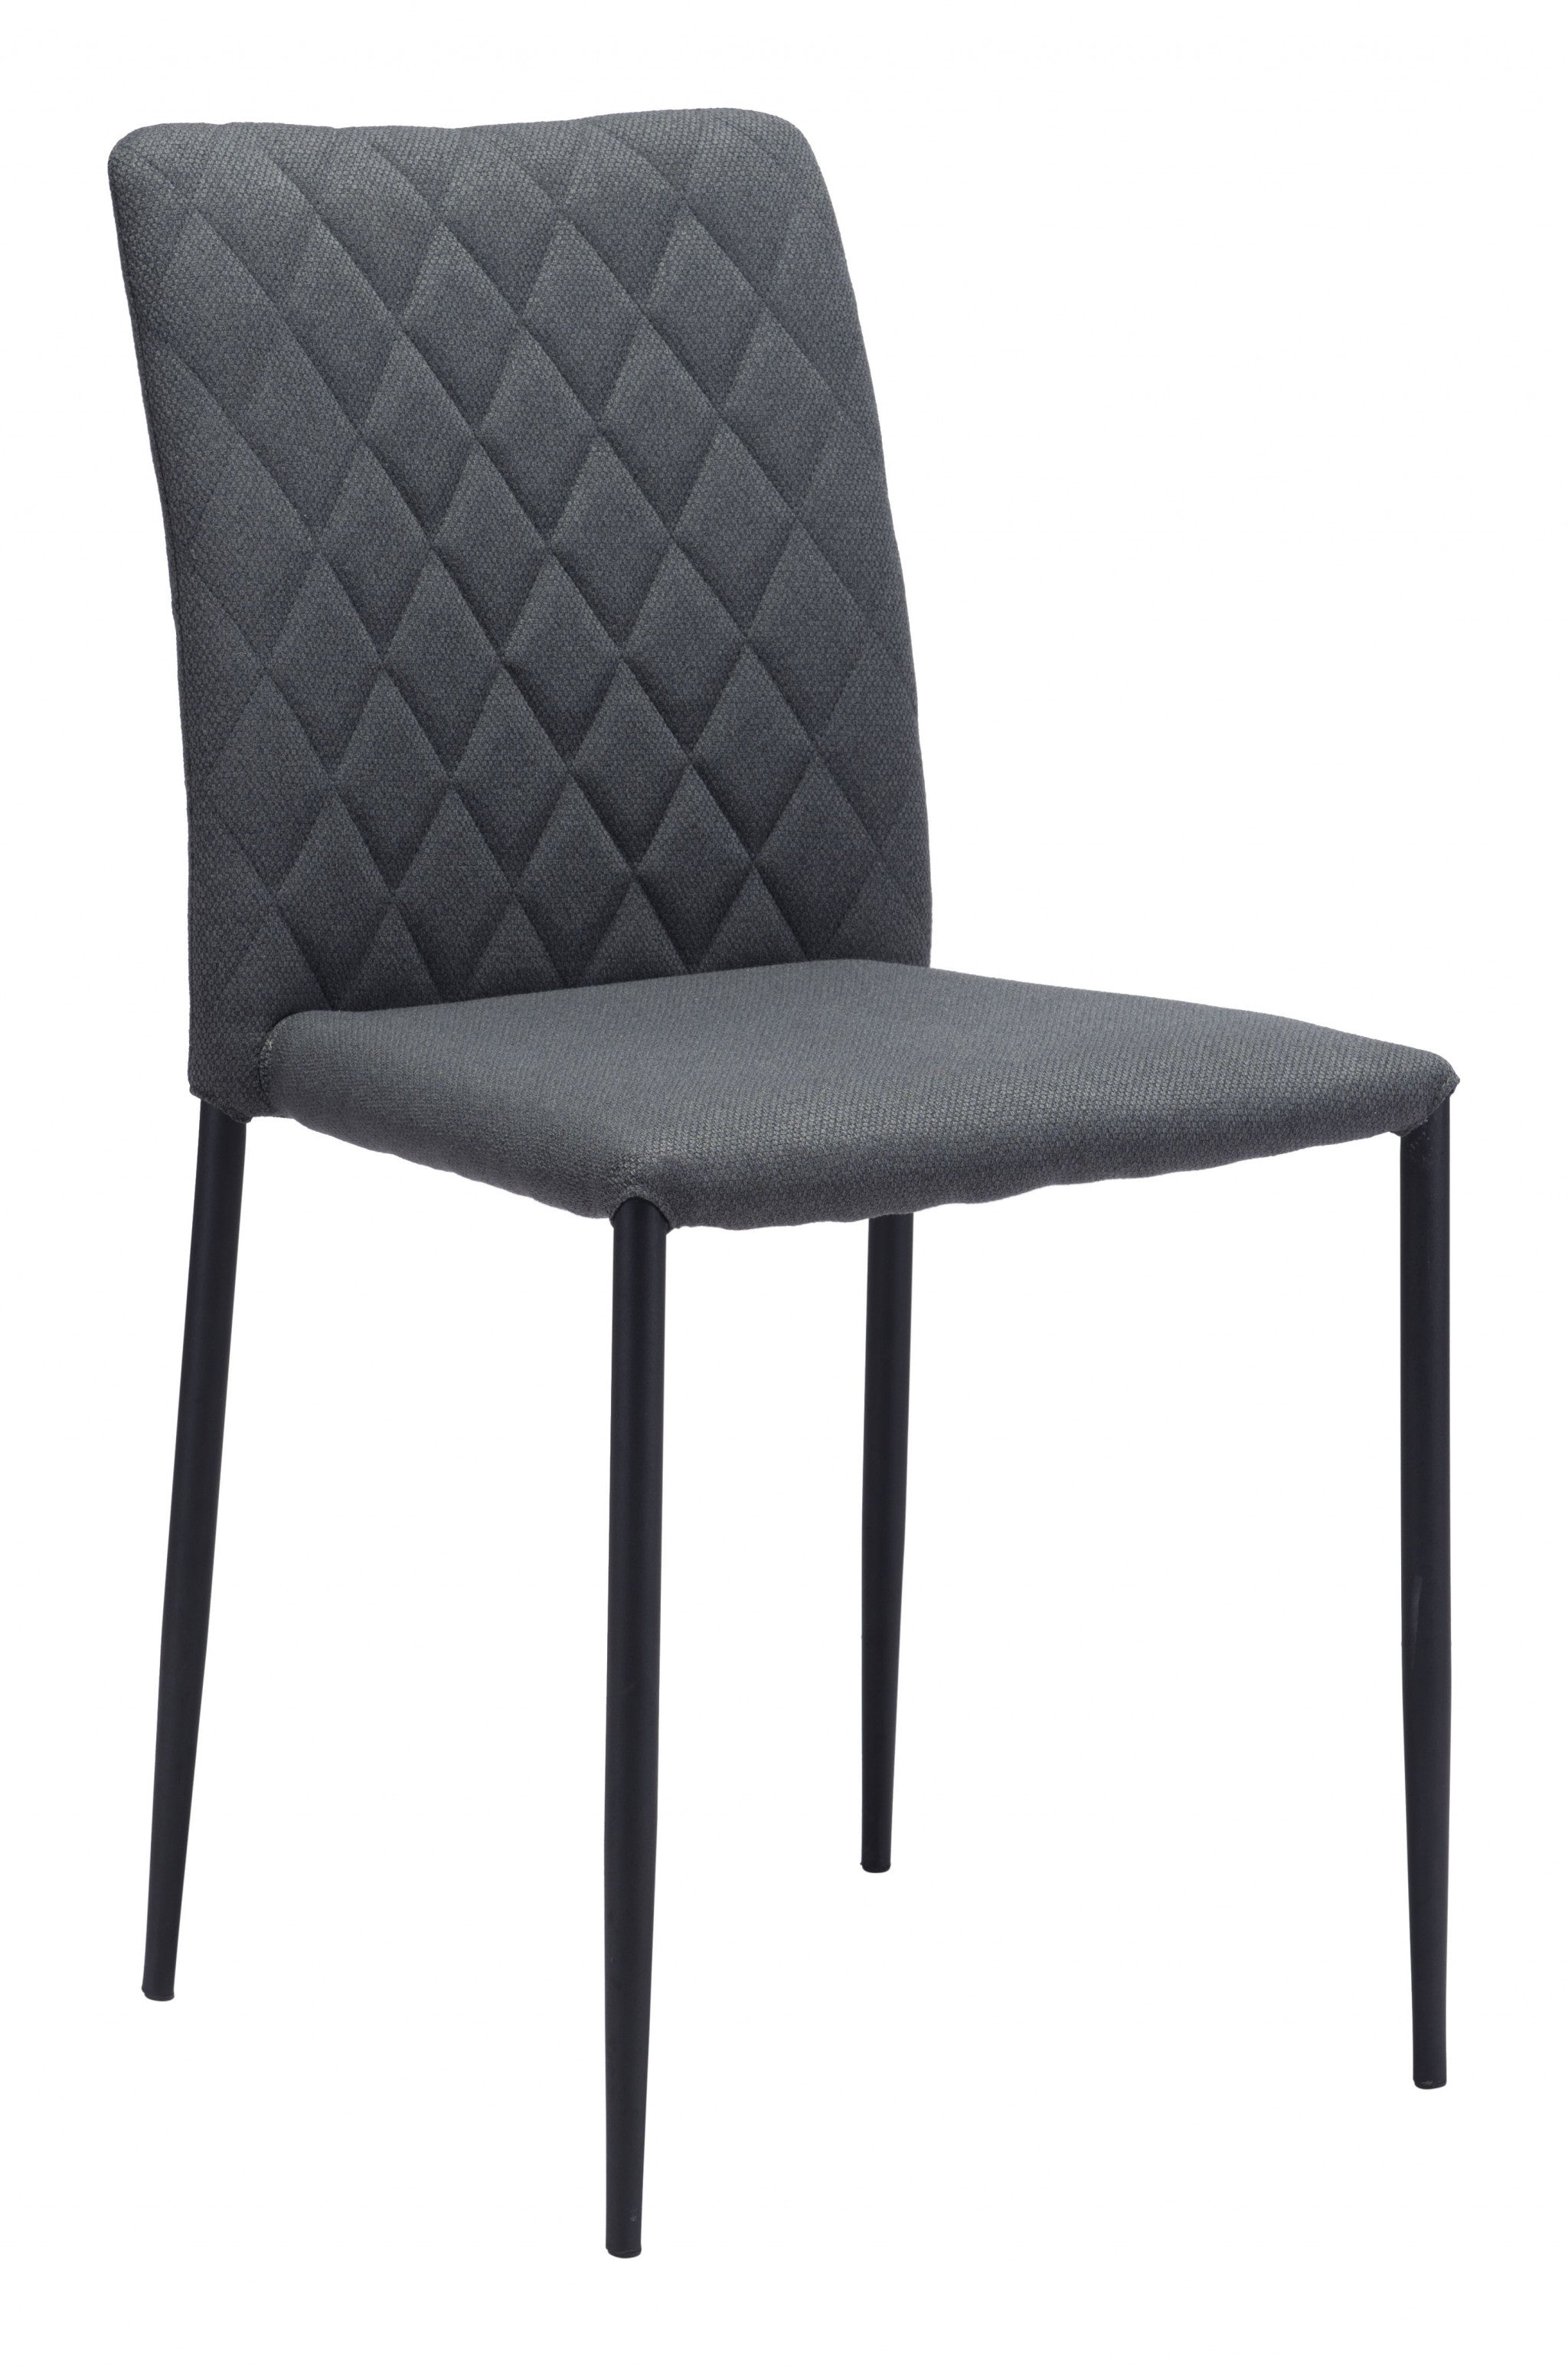 Set of Two Dark Gray Diamond Weave Dining Chairs